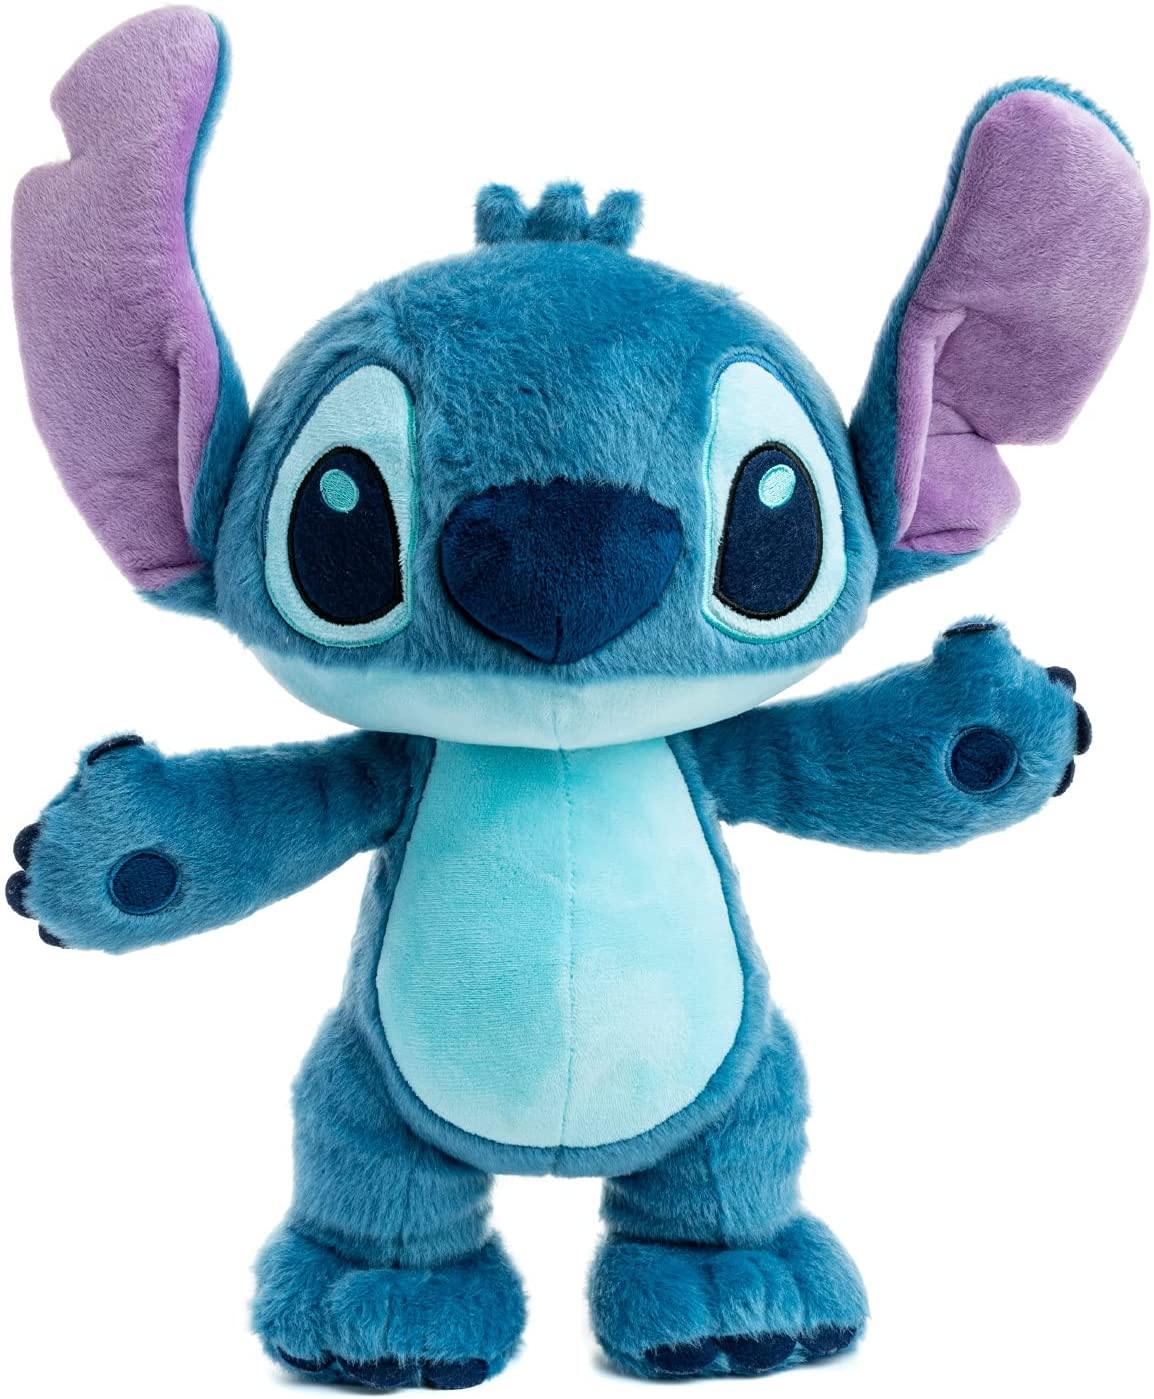 KIDS PREFERRED Disney Baby Stitch Stuffed Animal Plush, 15 Inches